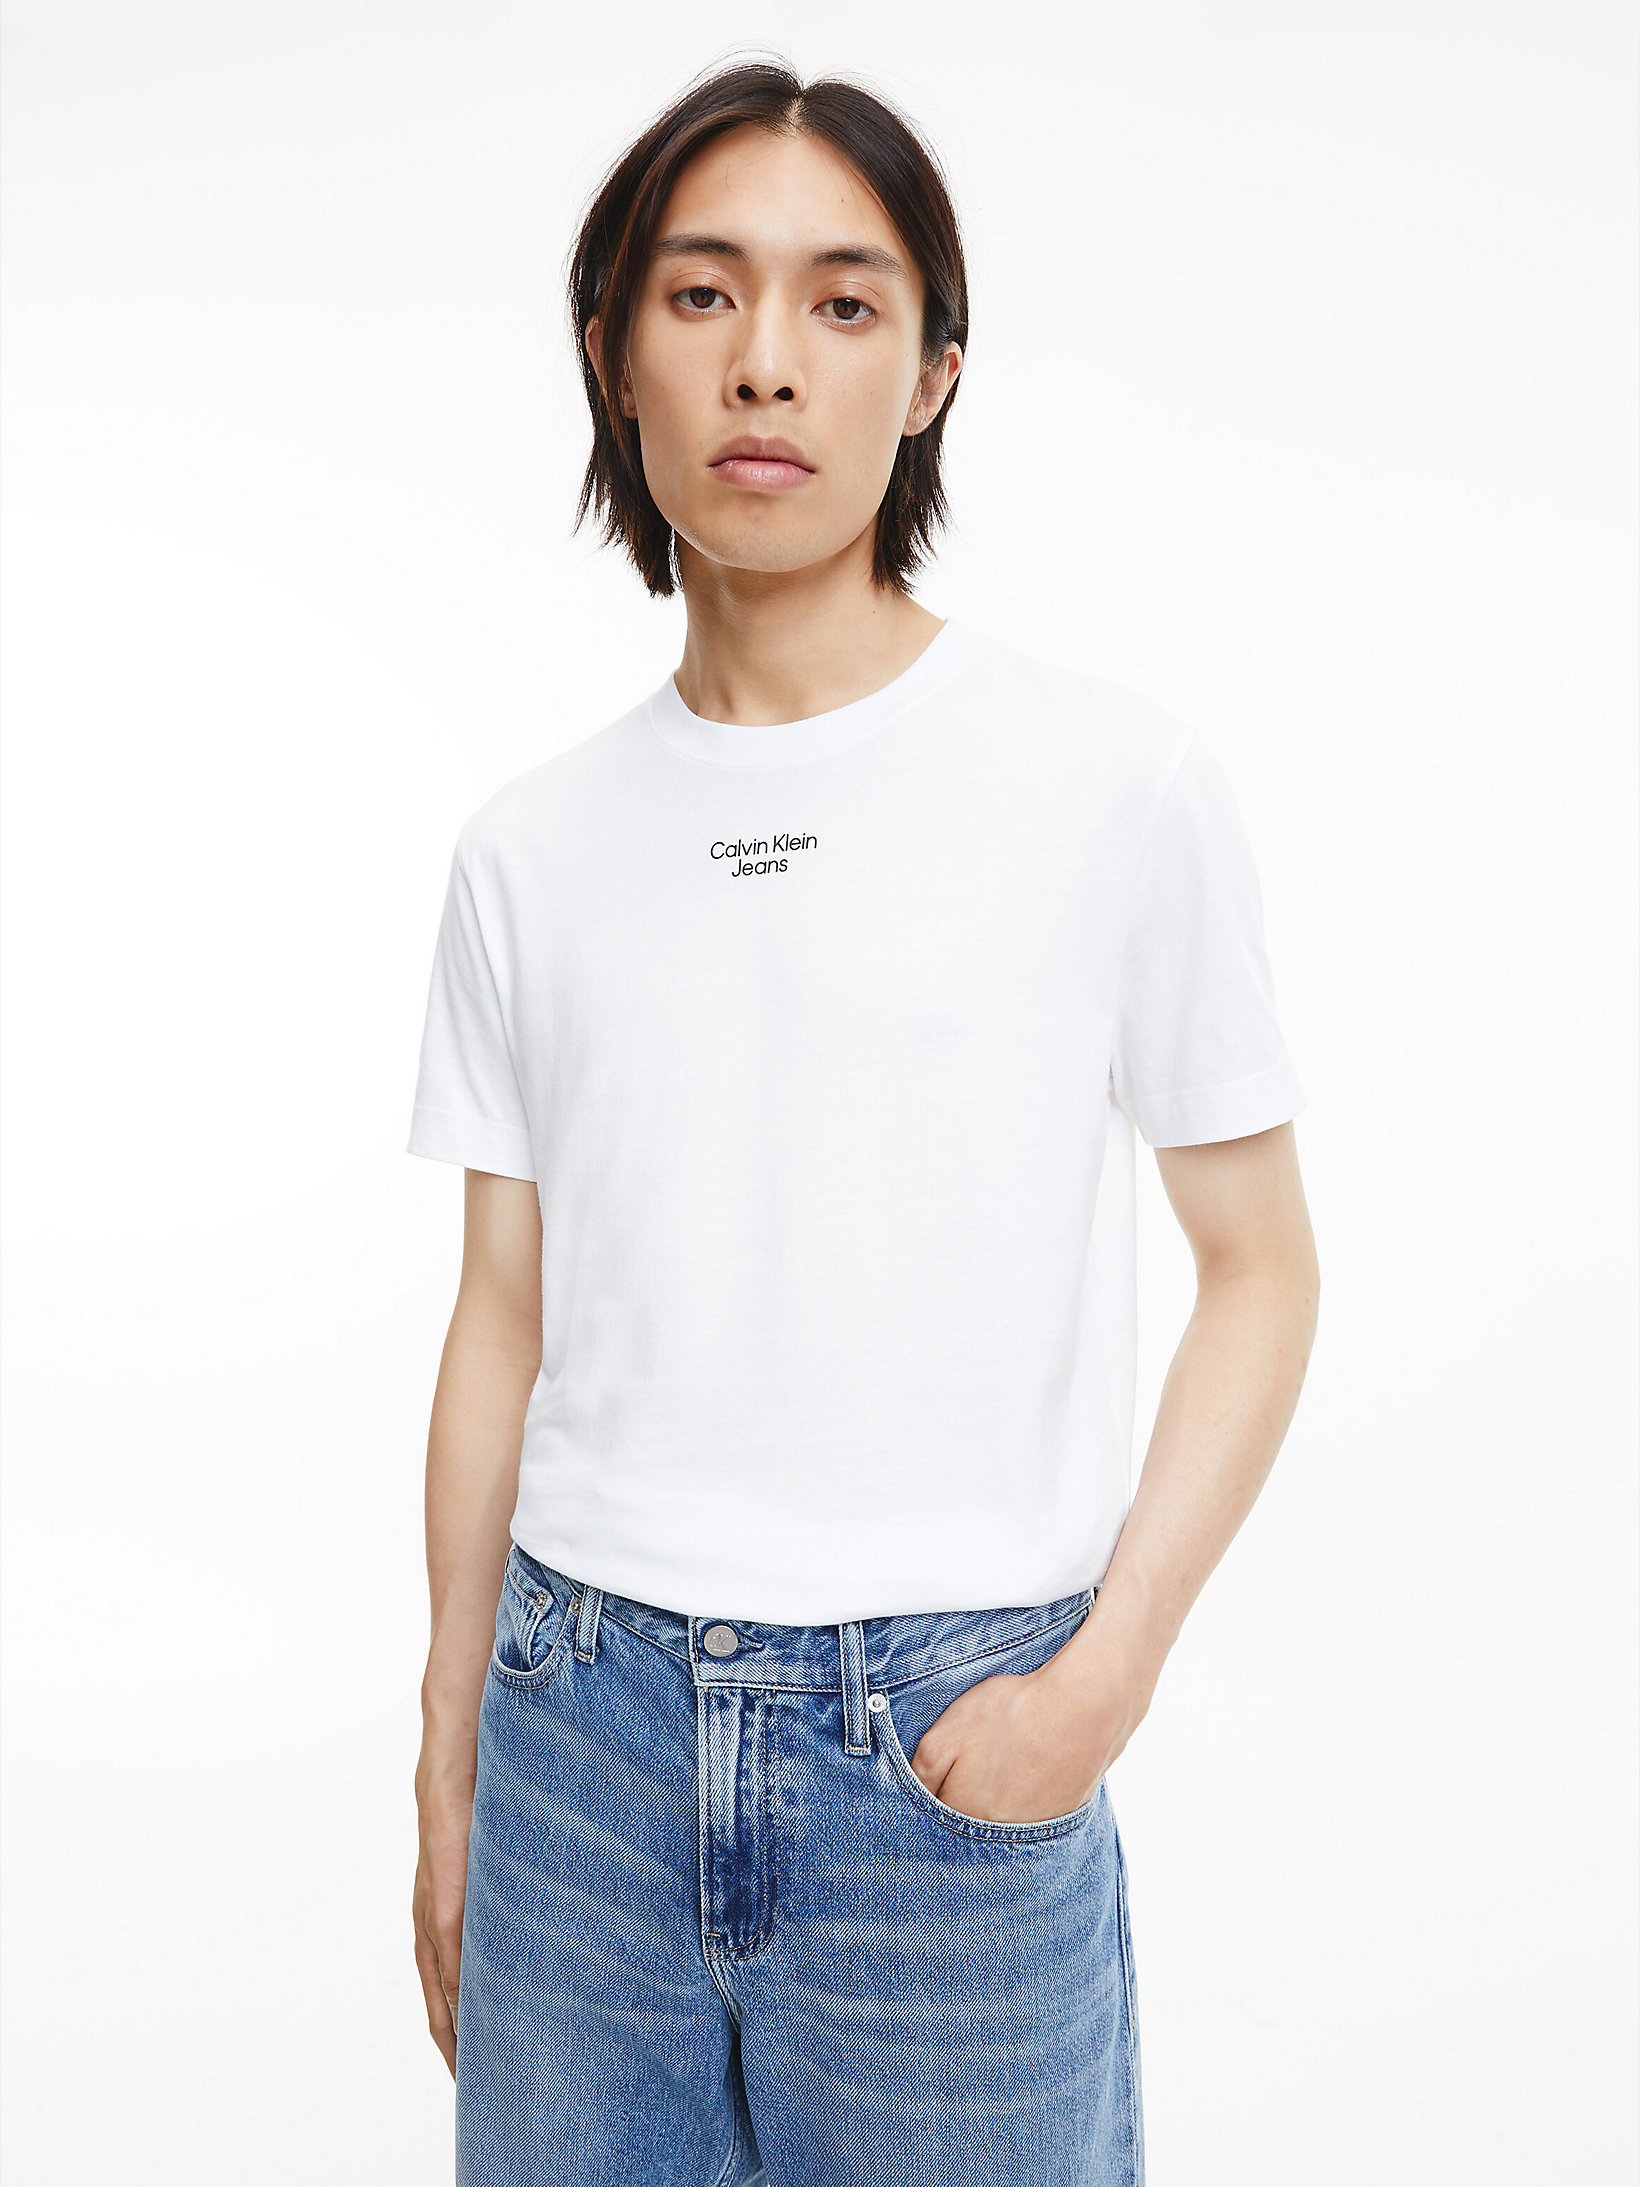 Bright White > Облегающая футболка из органического хлопка > undefined женщины - Calvin Klein